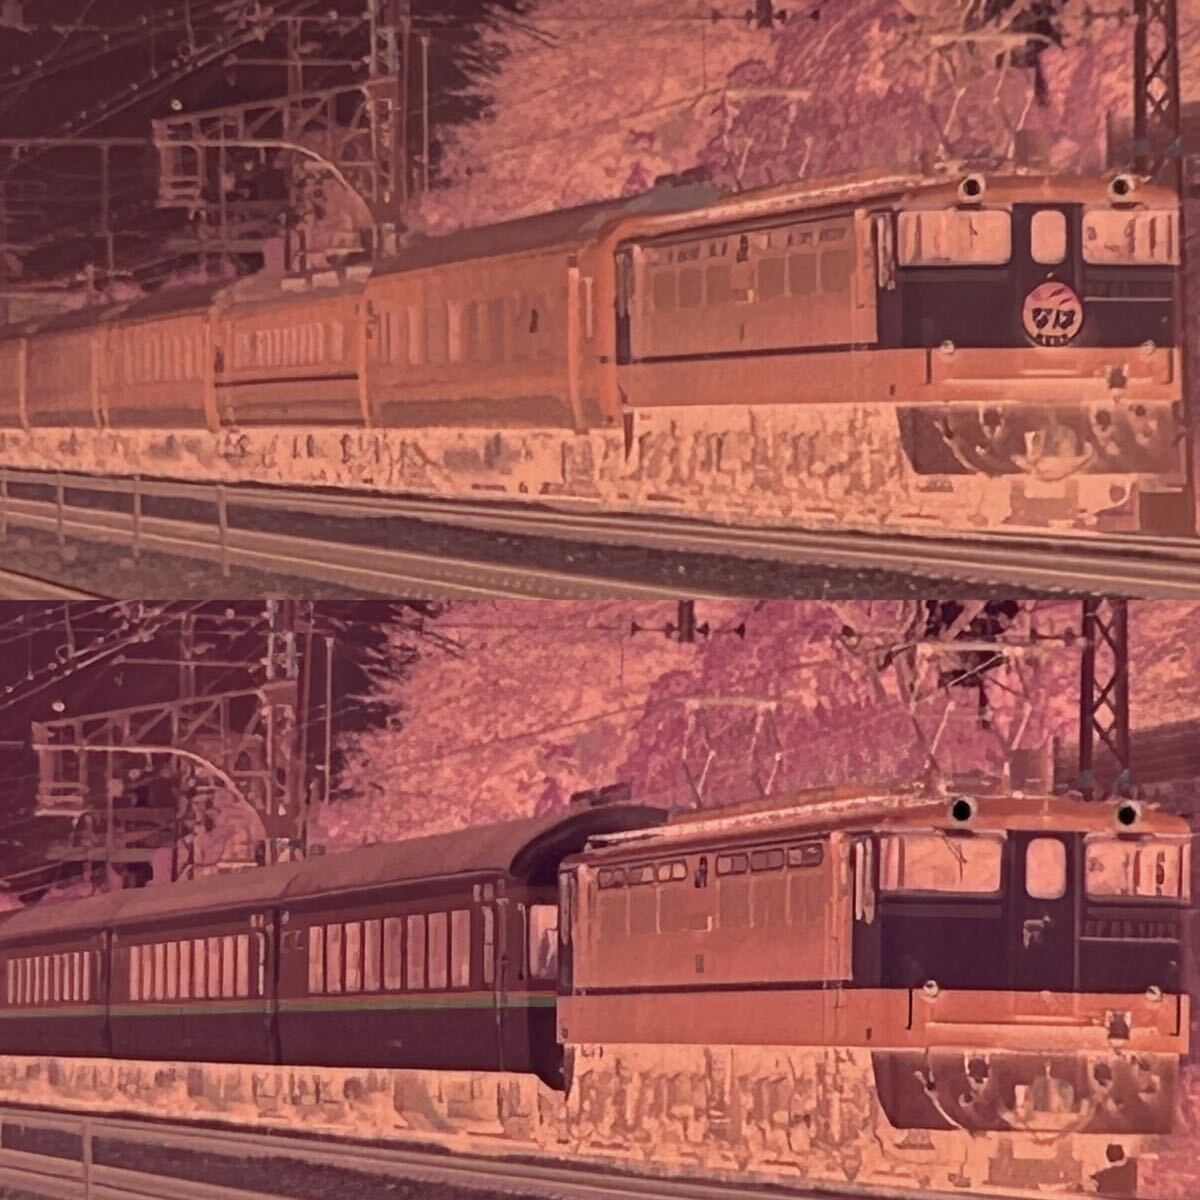  old railroad photograph nega film EF65123 EF651052 EF6654 EF6621 EF58150 EF651131 tree see station EF6530 EF651129 EF651046sei shell train (050704